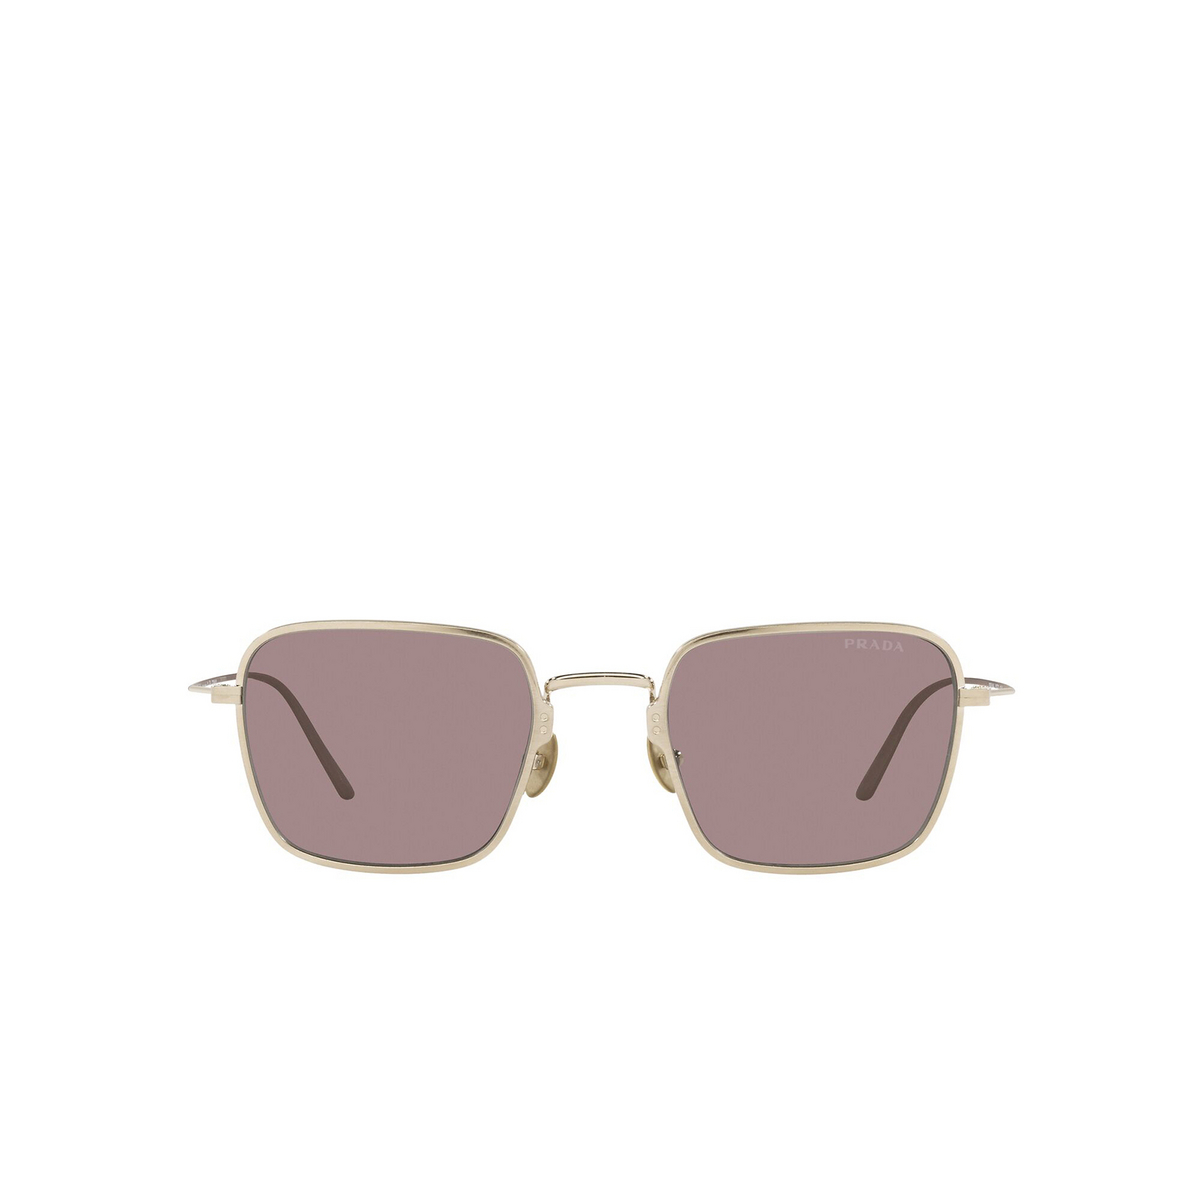 Prada® Square Sunglasses: PR 54WS color Pale Gold 06Q06I - front view.